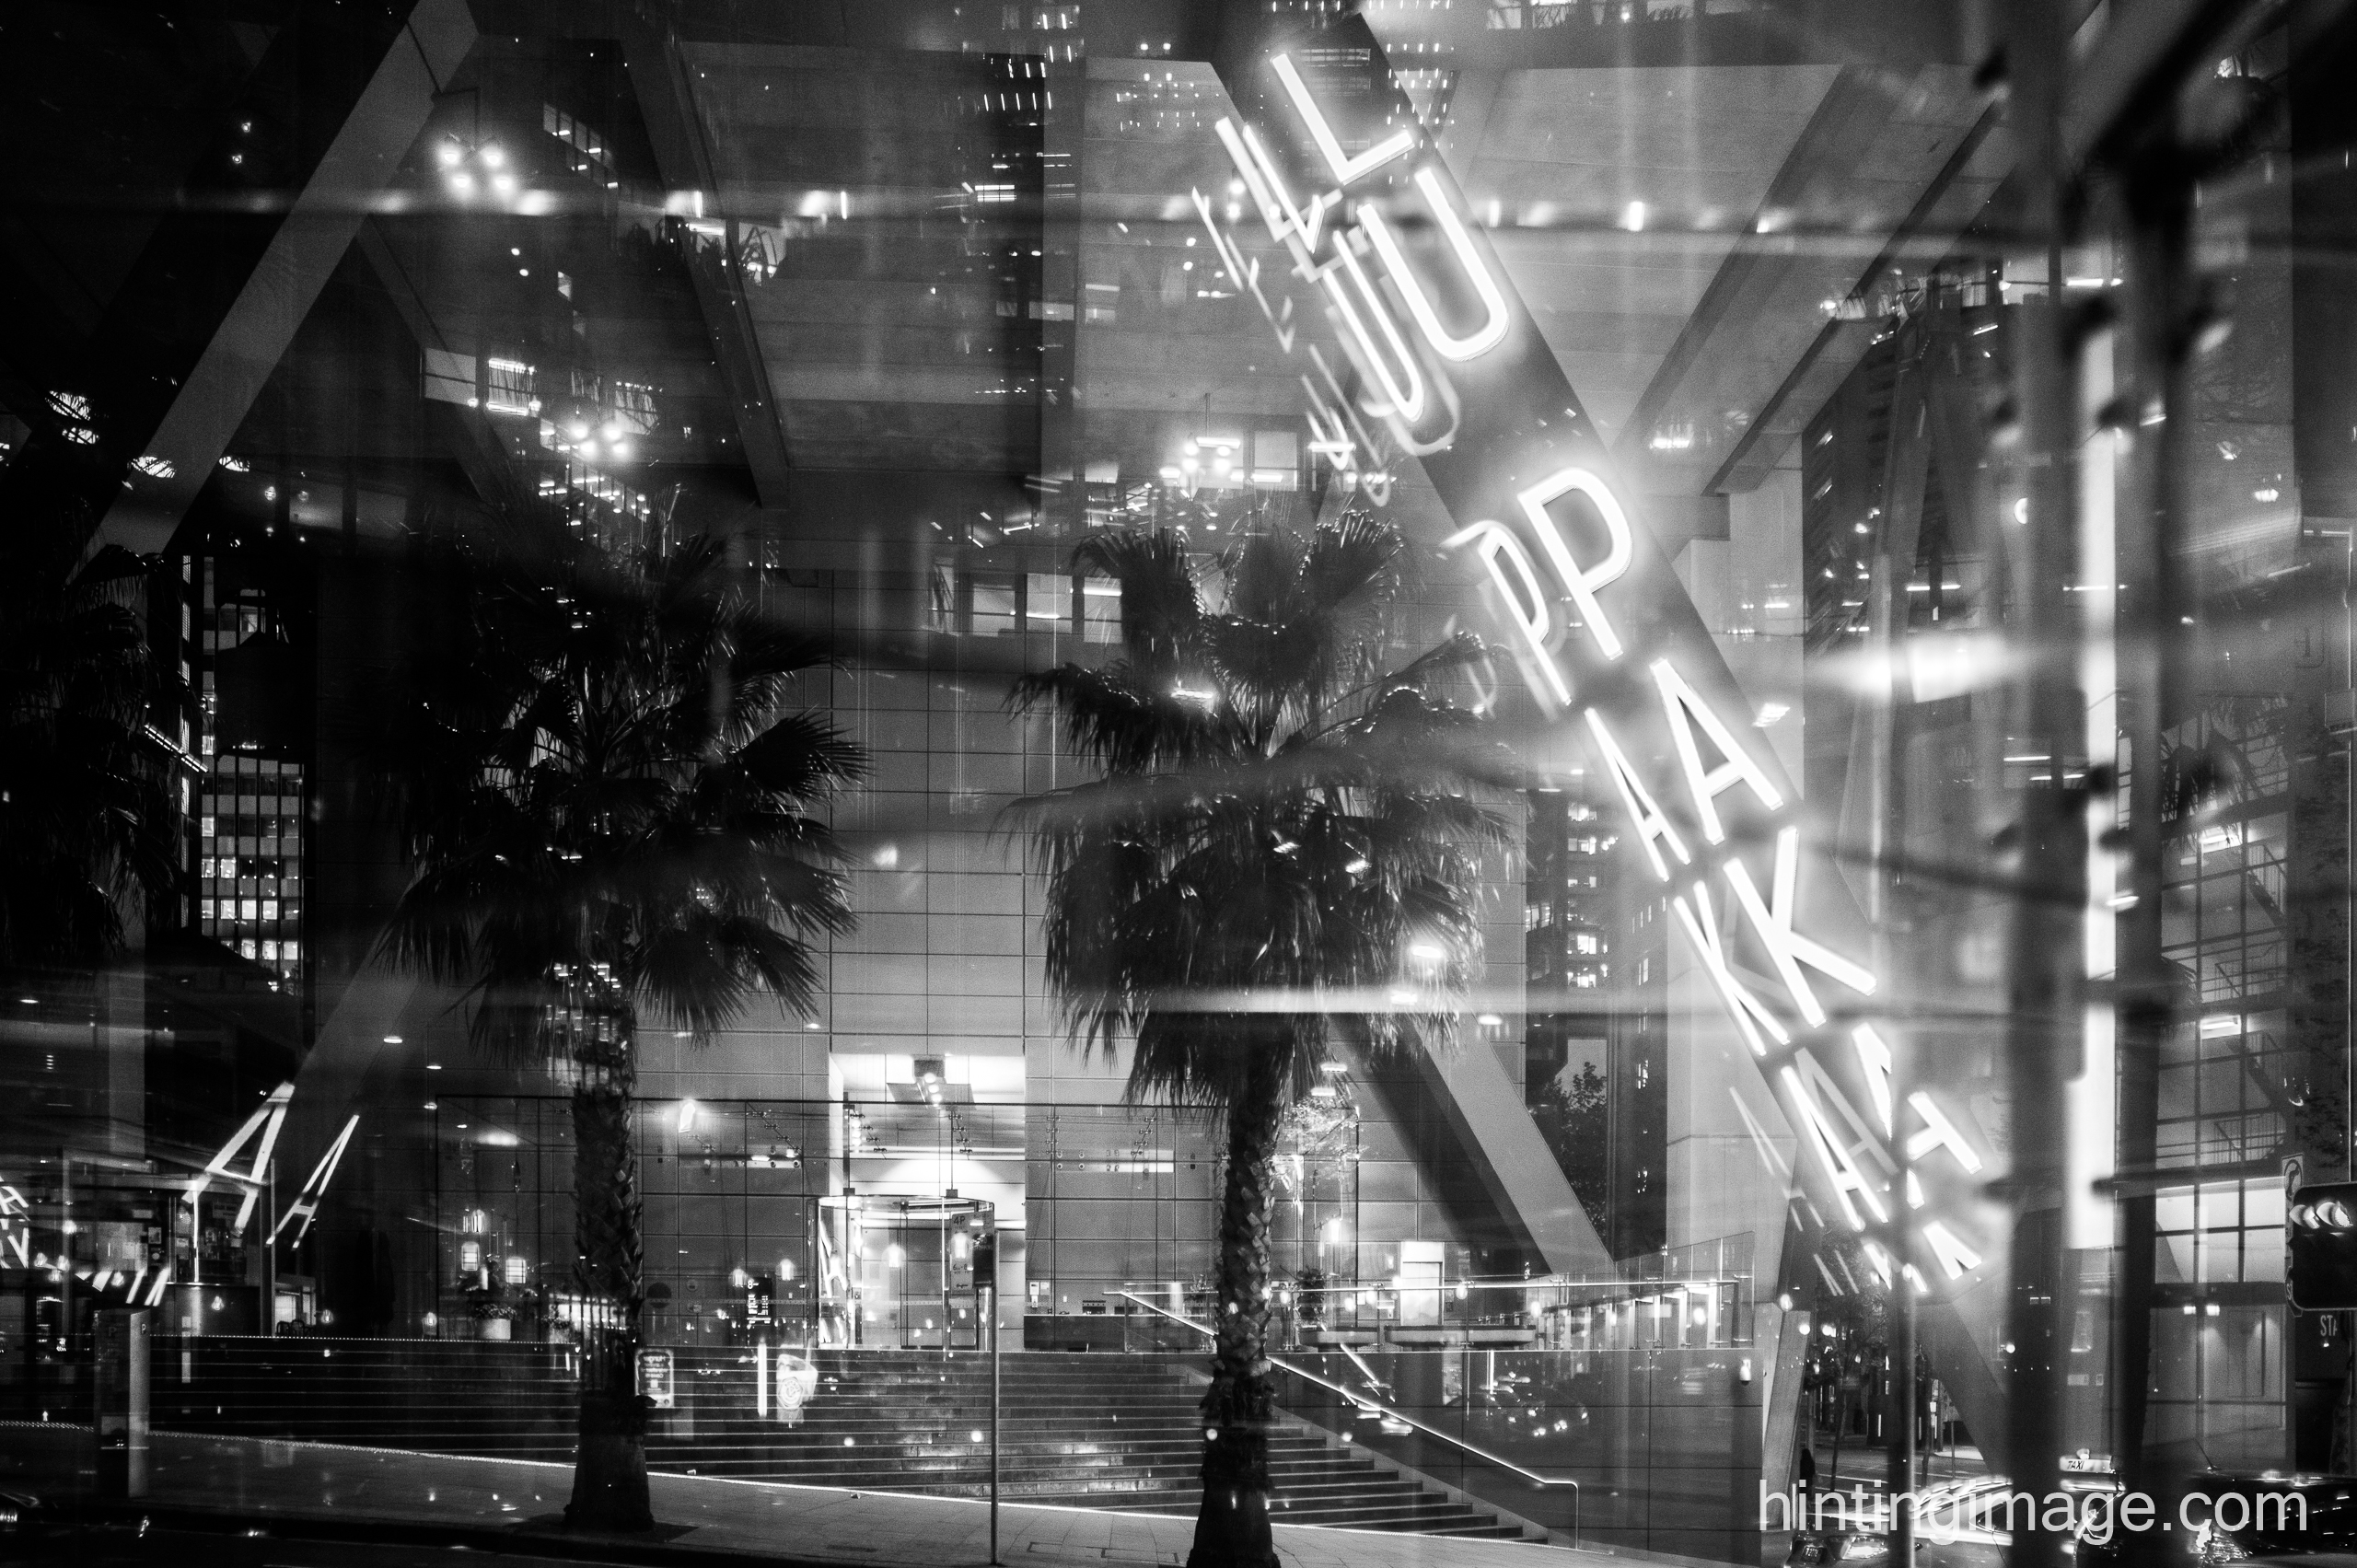 Chifley Sq Reflection black and white photo